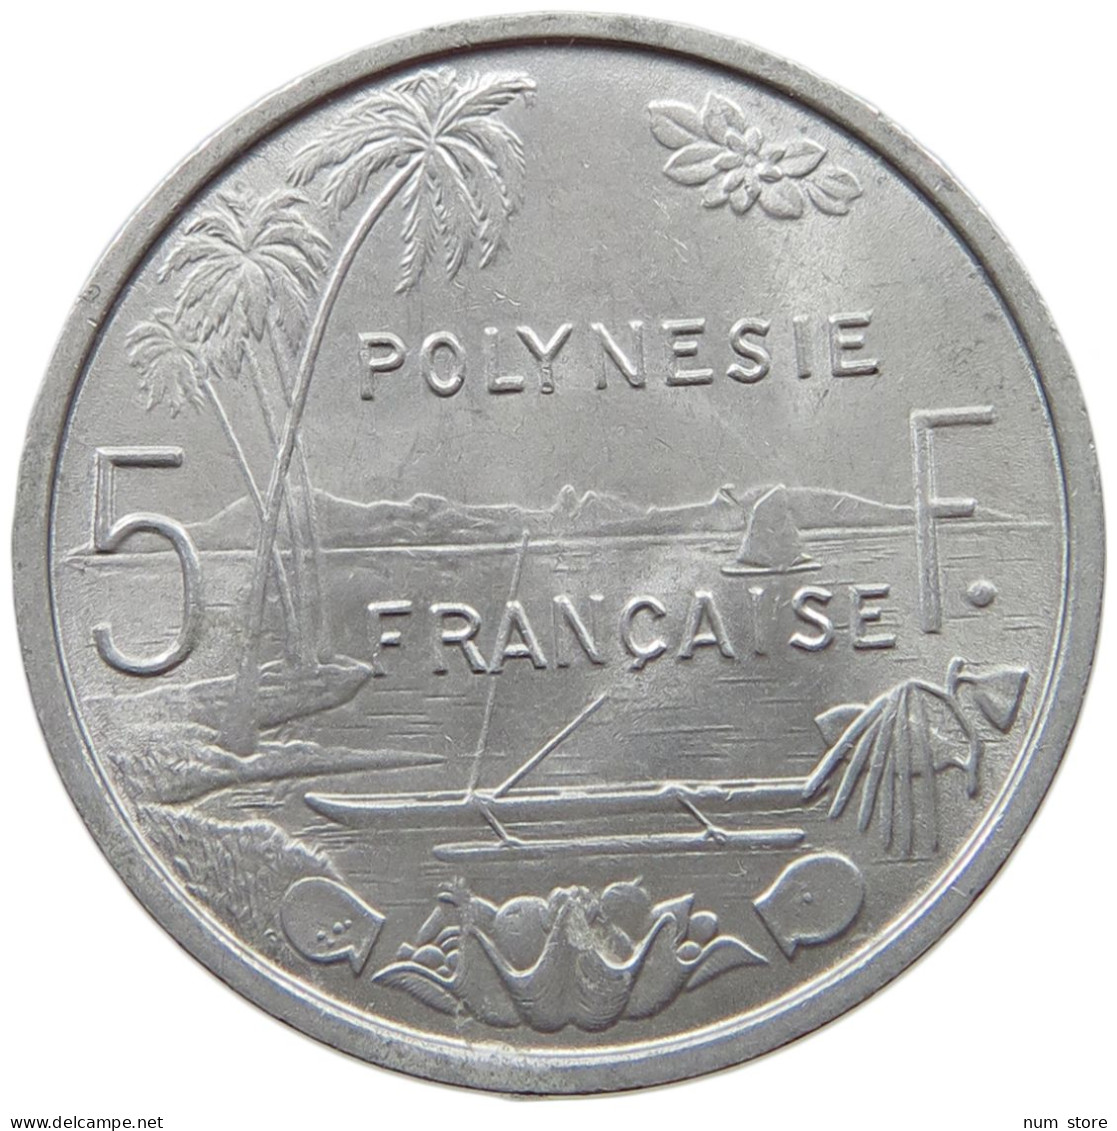 POLYNESIA 5 FRANCS 1975  #a021 1119 - Polinesia Francesa